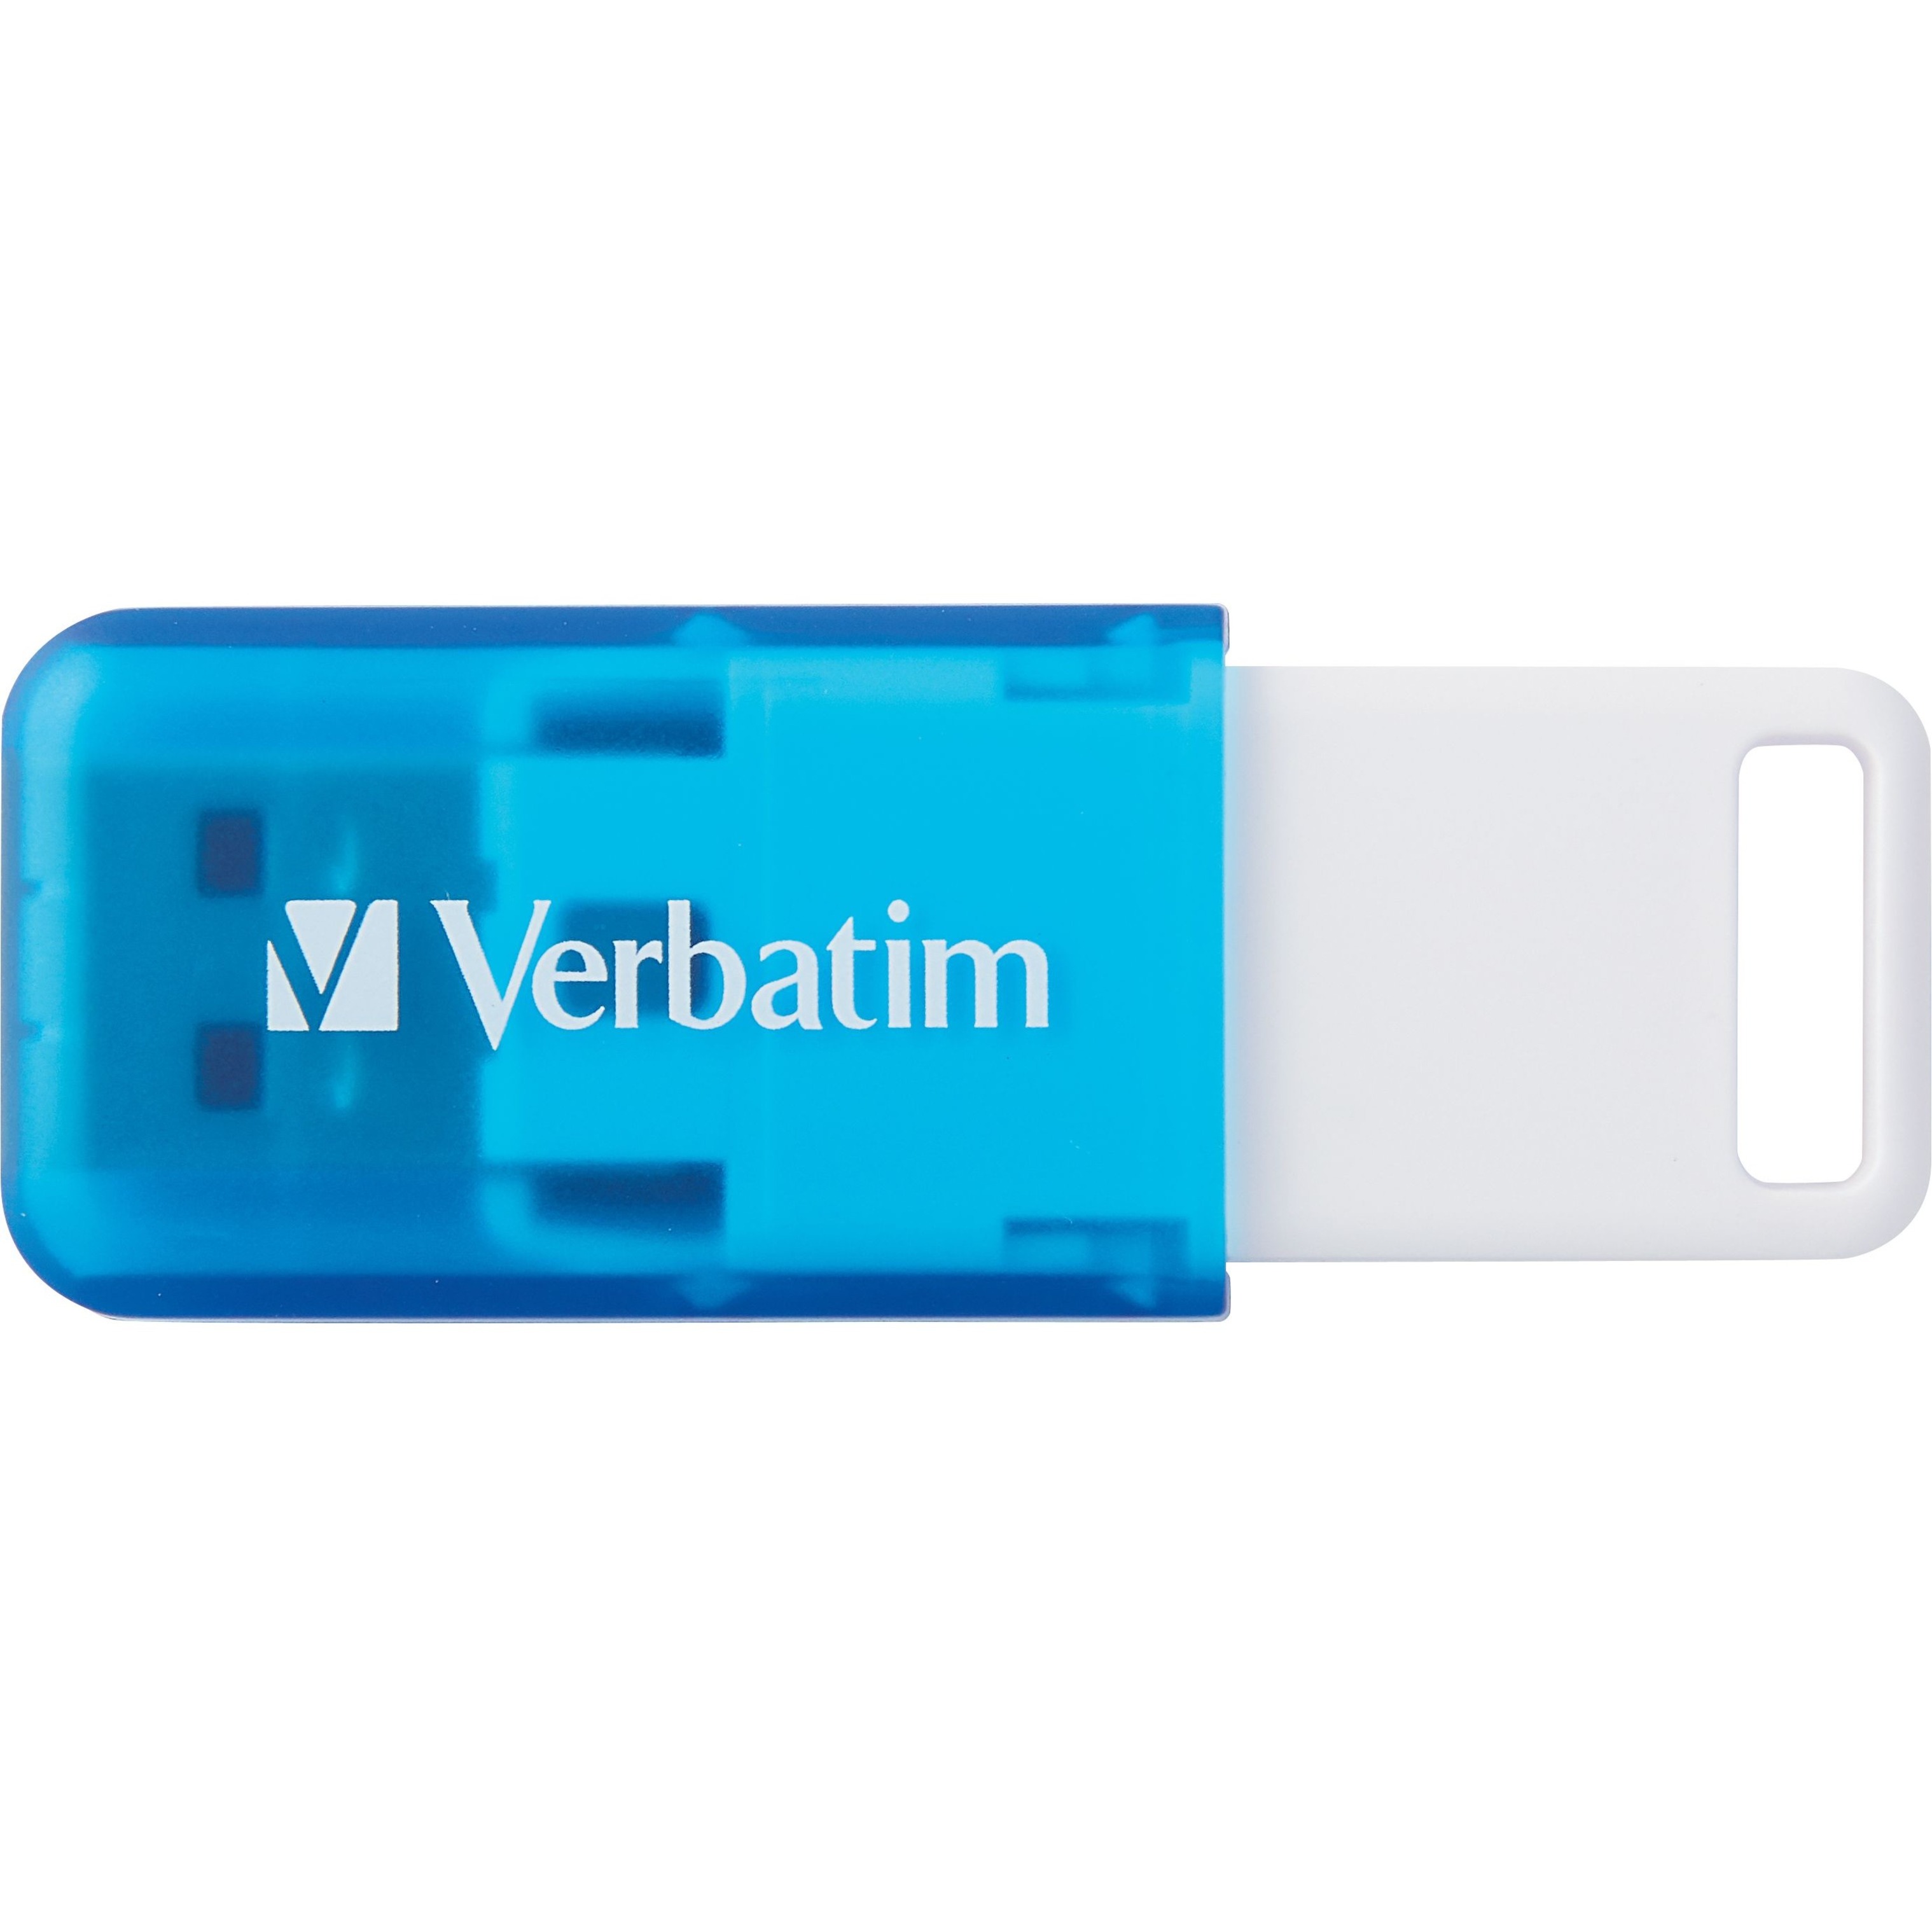 Verbatim 32GB USB Flash Drive - image 2 of 19